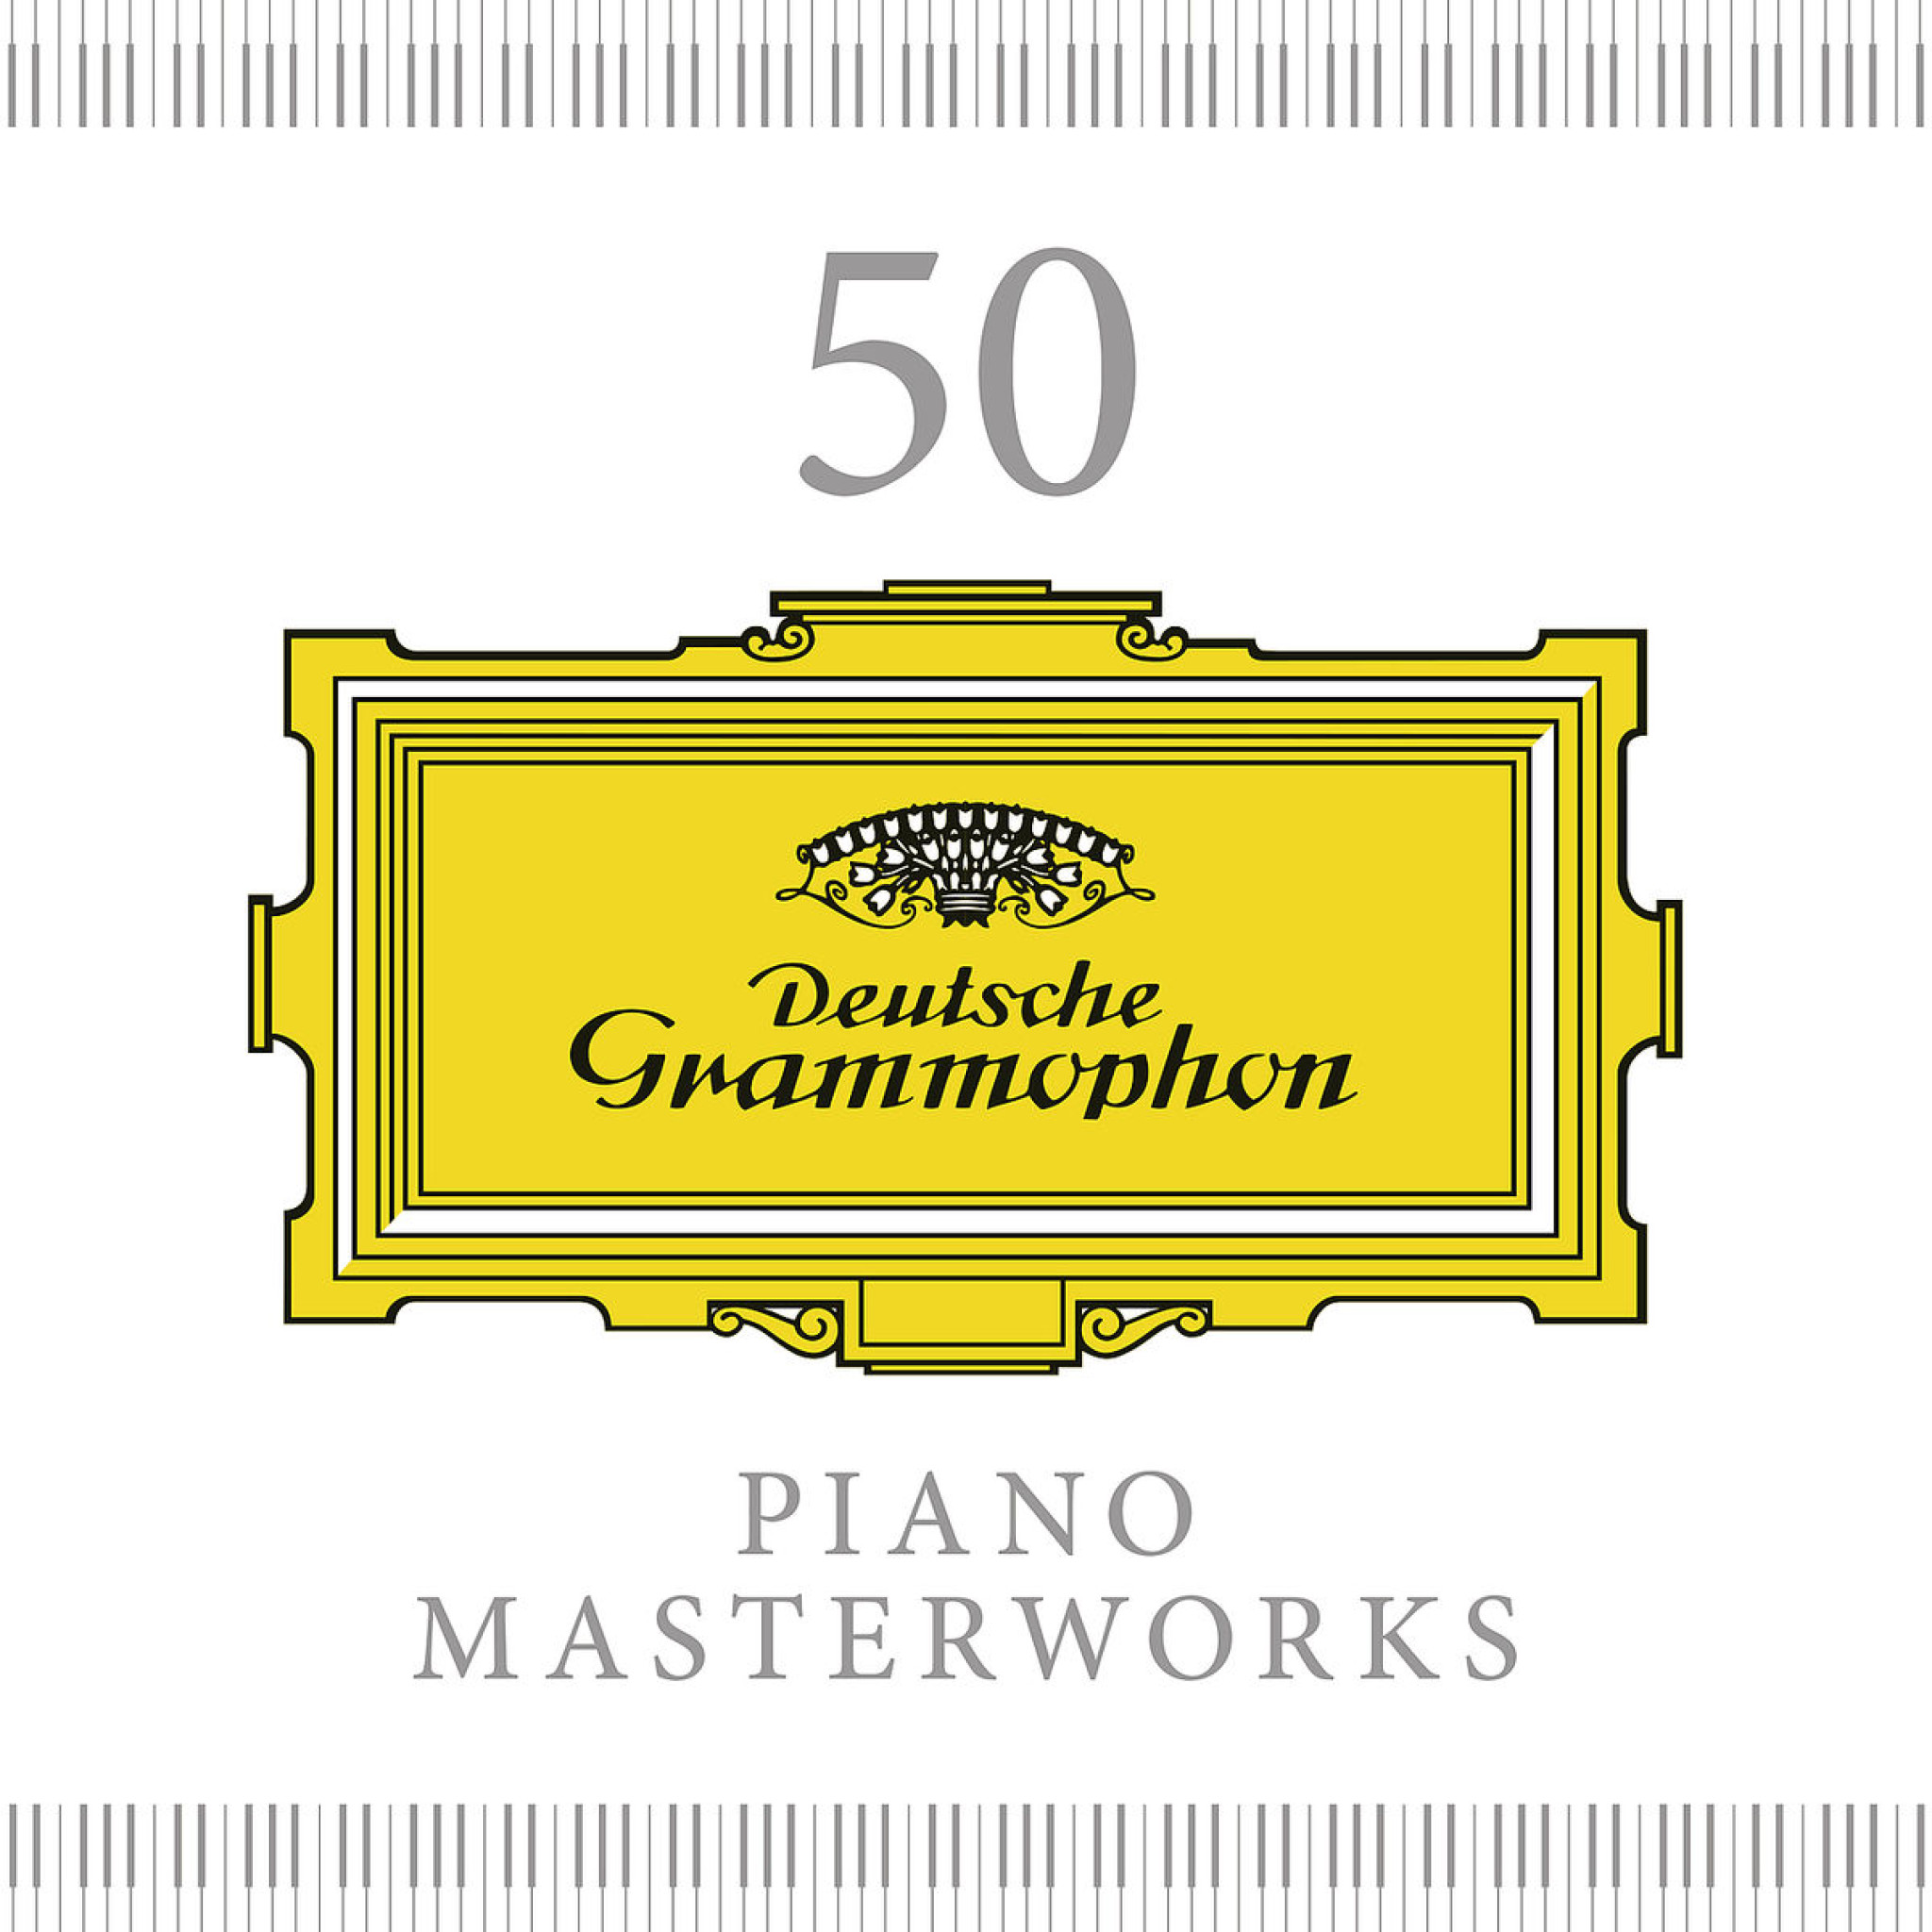 50 PIANO MASTERWORKS